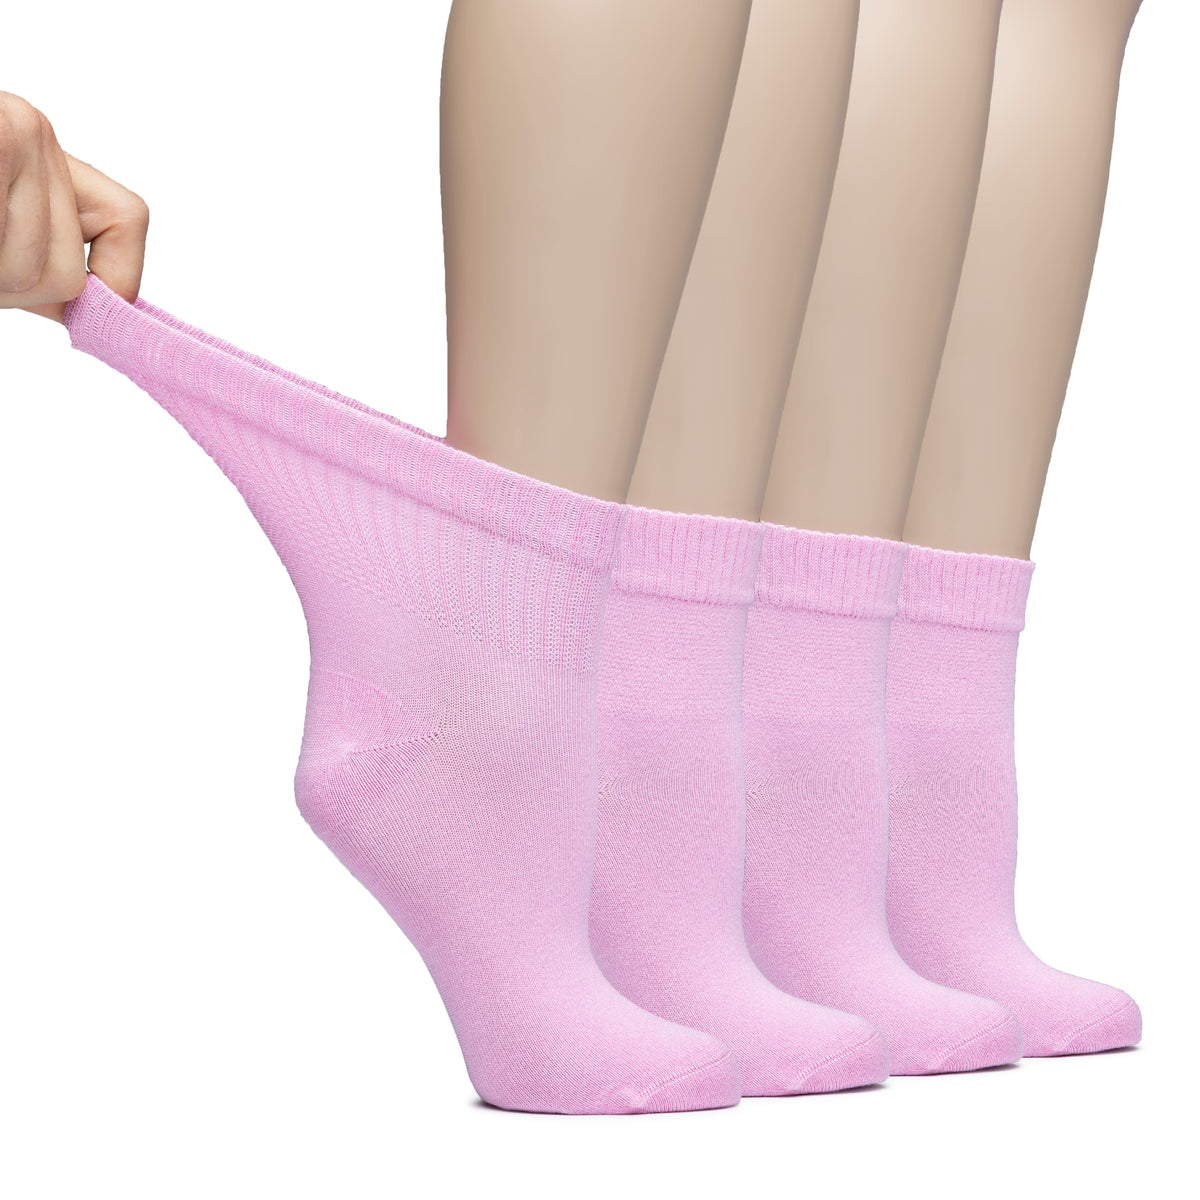 Hugh Ugoli Lightweight Women's Diabetic Ankle Socks Bamboo Thin Socks Seamless Toe and Non-Binding Top, 4 Pairs, , Shoe Size: 6-9/10-12 | Shoe Size: 6-9 | Pool Blue